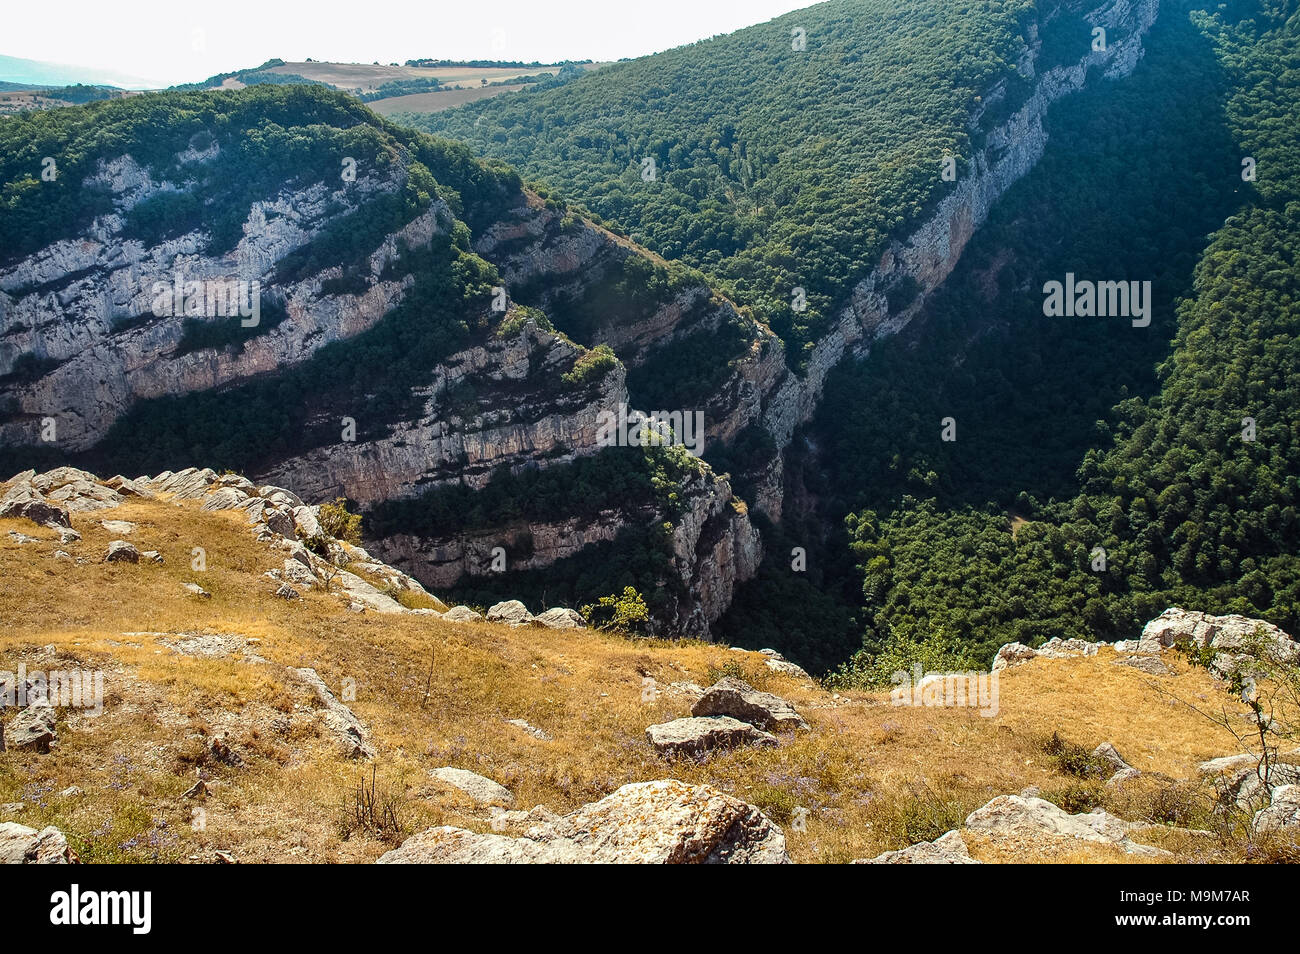 Rocky limestone mountains in Nagorno Karabakh, a disputed territory between Armenia and Azerbaijan but internationally recognized as part of Azerbaija Stock Photo